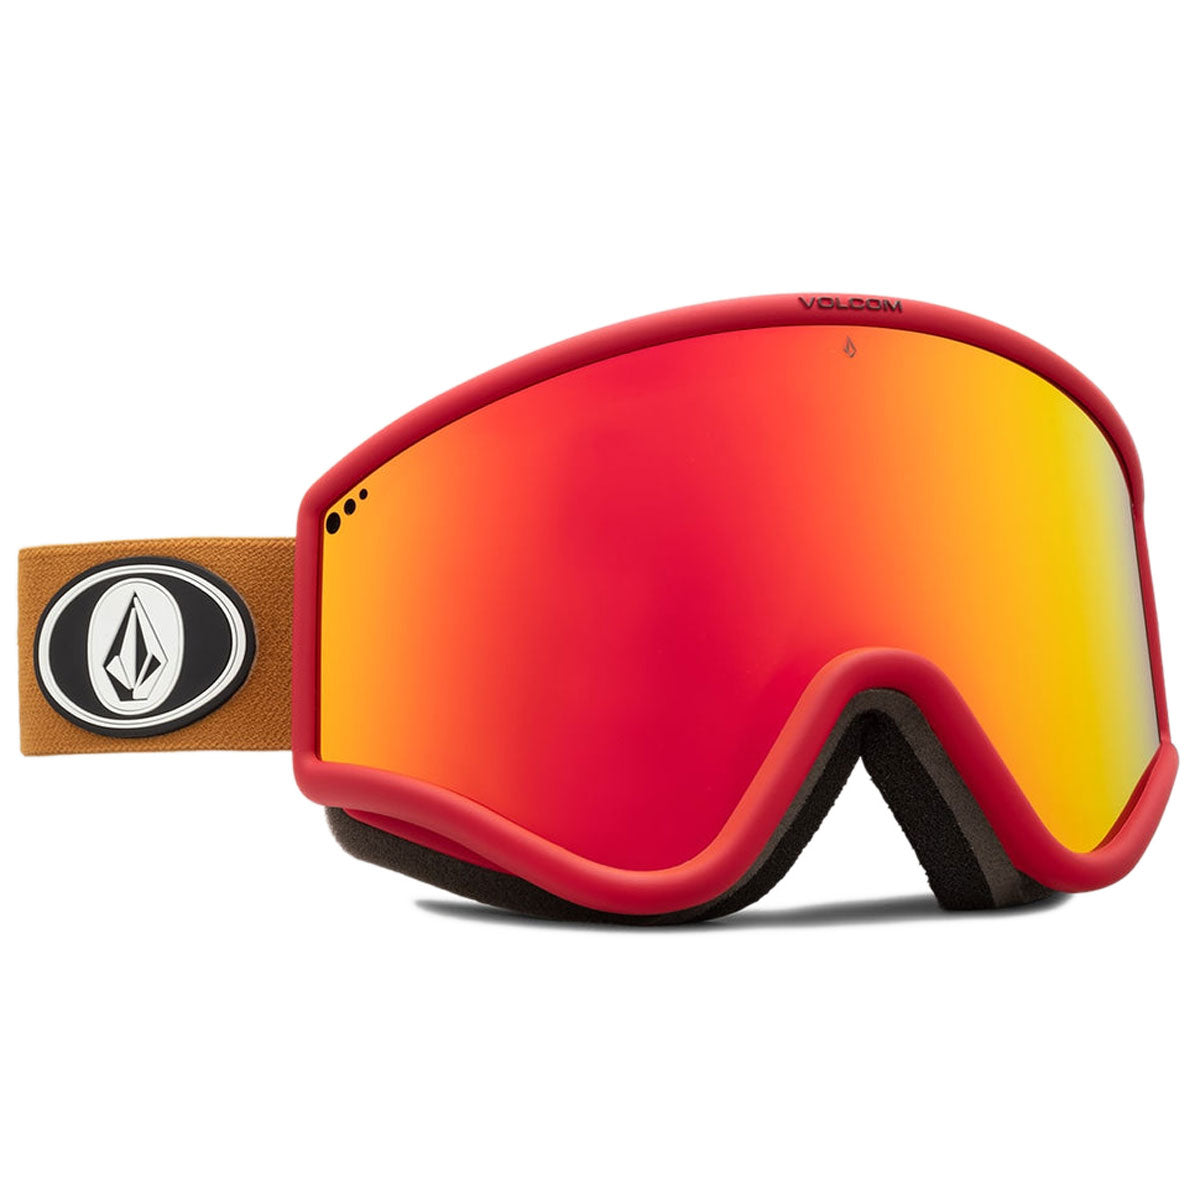 Volcom Yae Snowboard Goggles - Red/Charamel/Red Chrome image 3